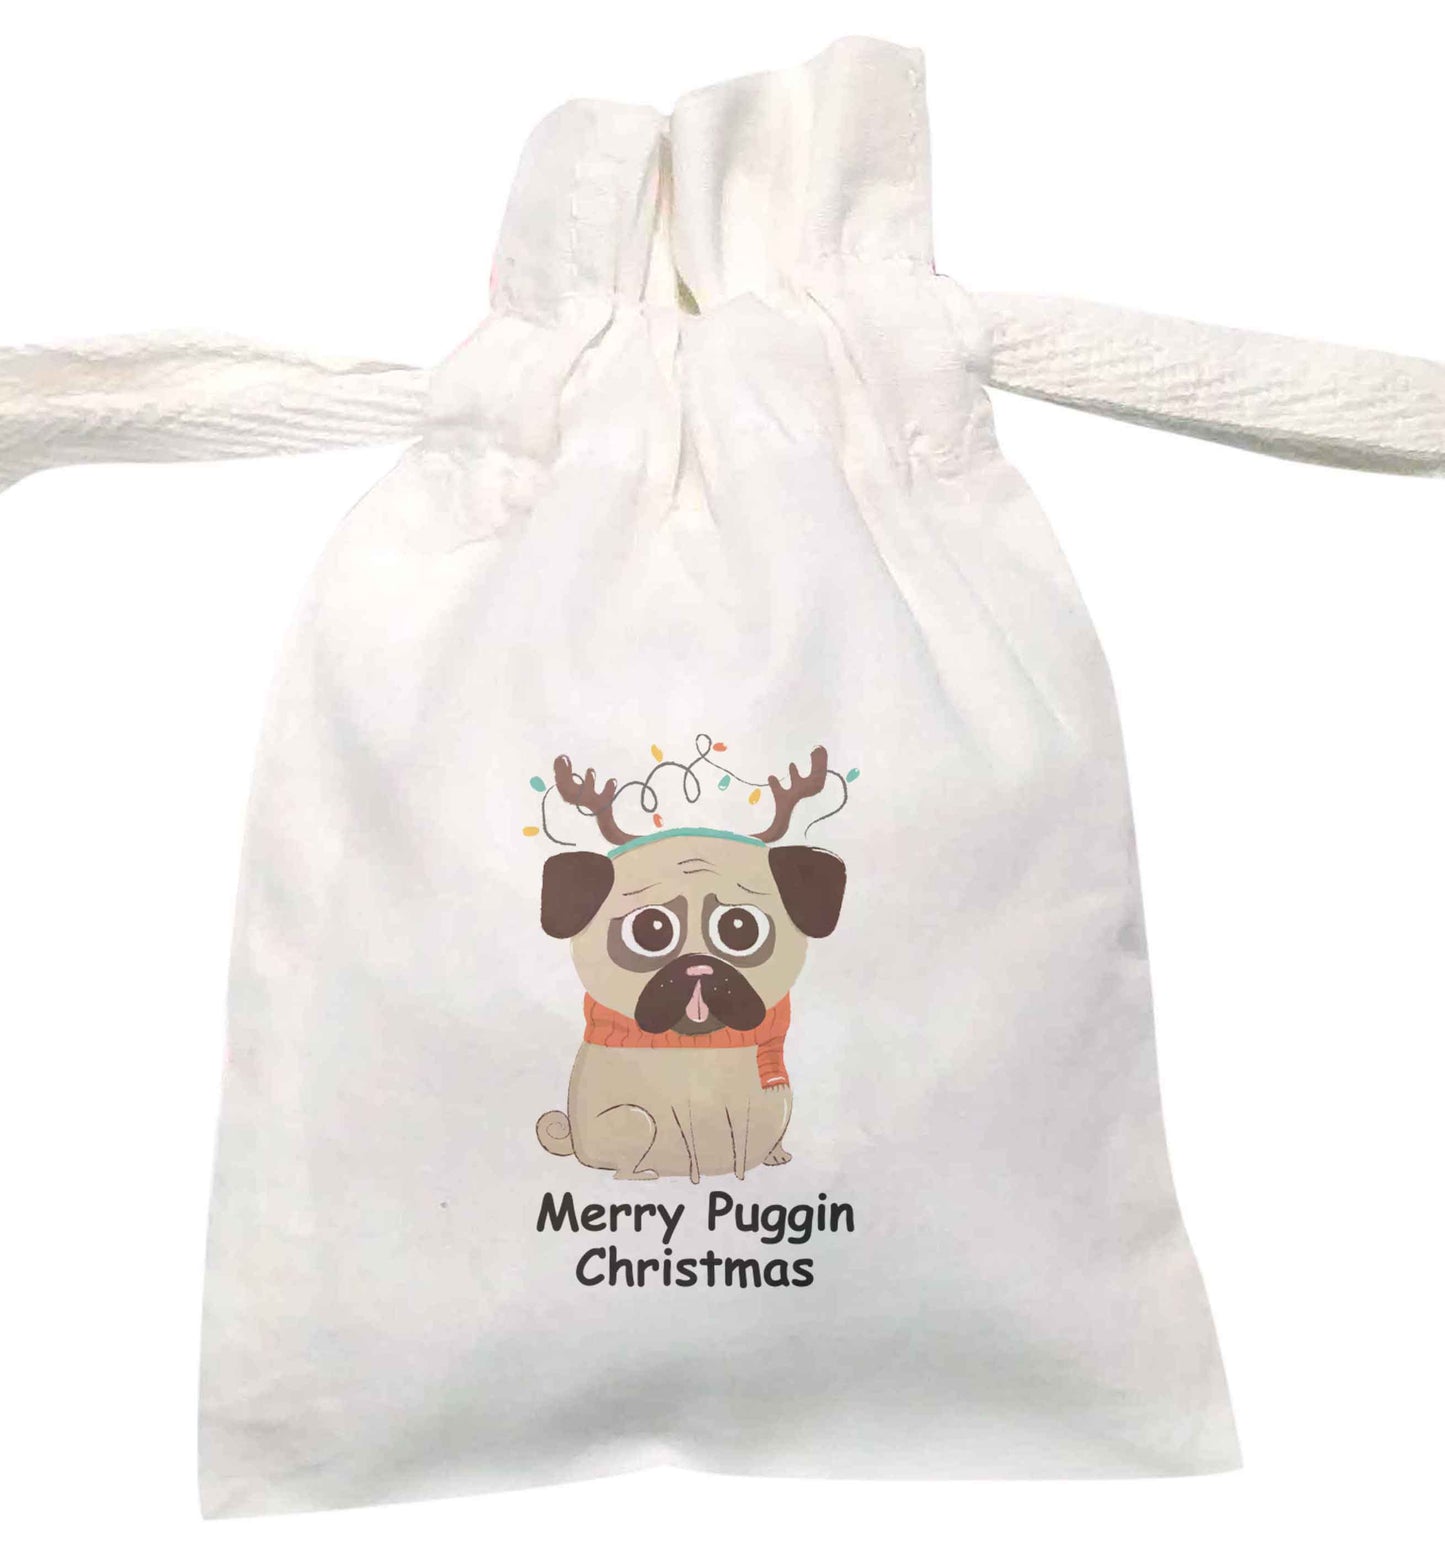 Merry puggin' Chirstmas | XS - L | Pouch / Drawstring bag / Sack | Organic Cotton | Bulk discounts available!